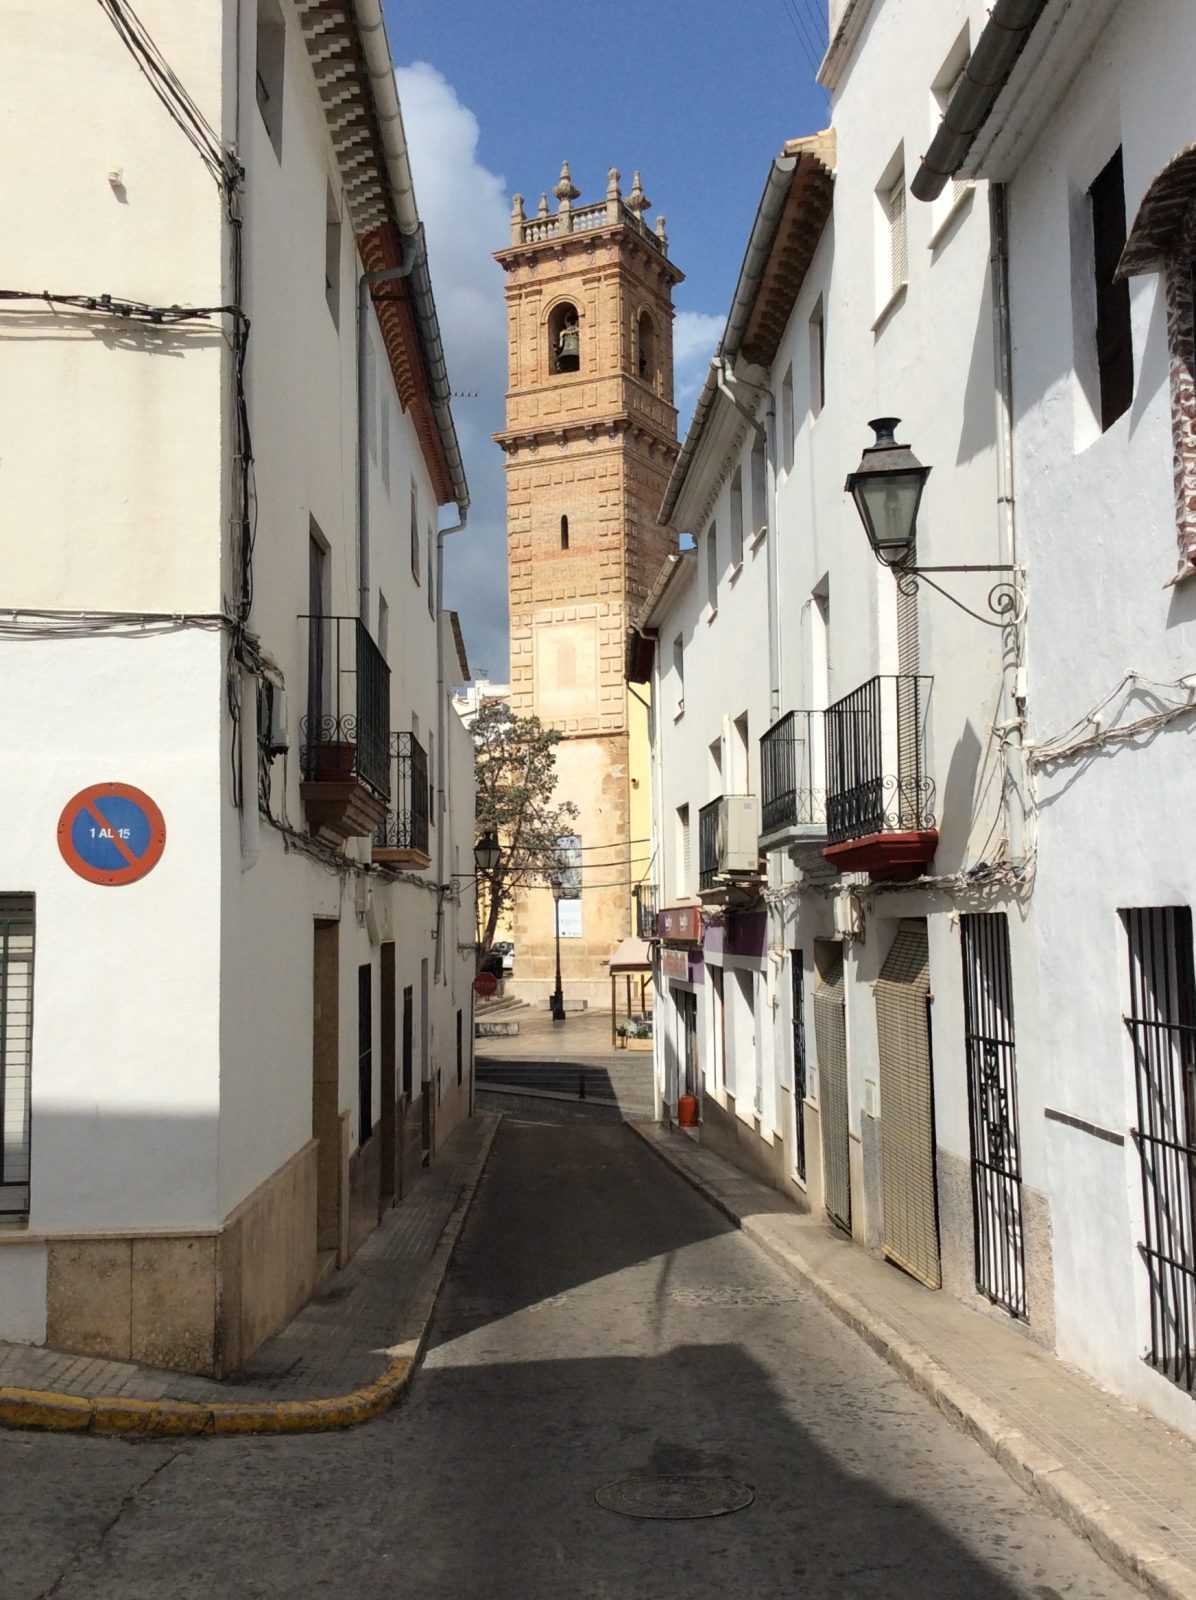 View of the San Roc Parish Church in Oliva, Valencia